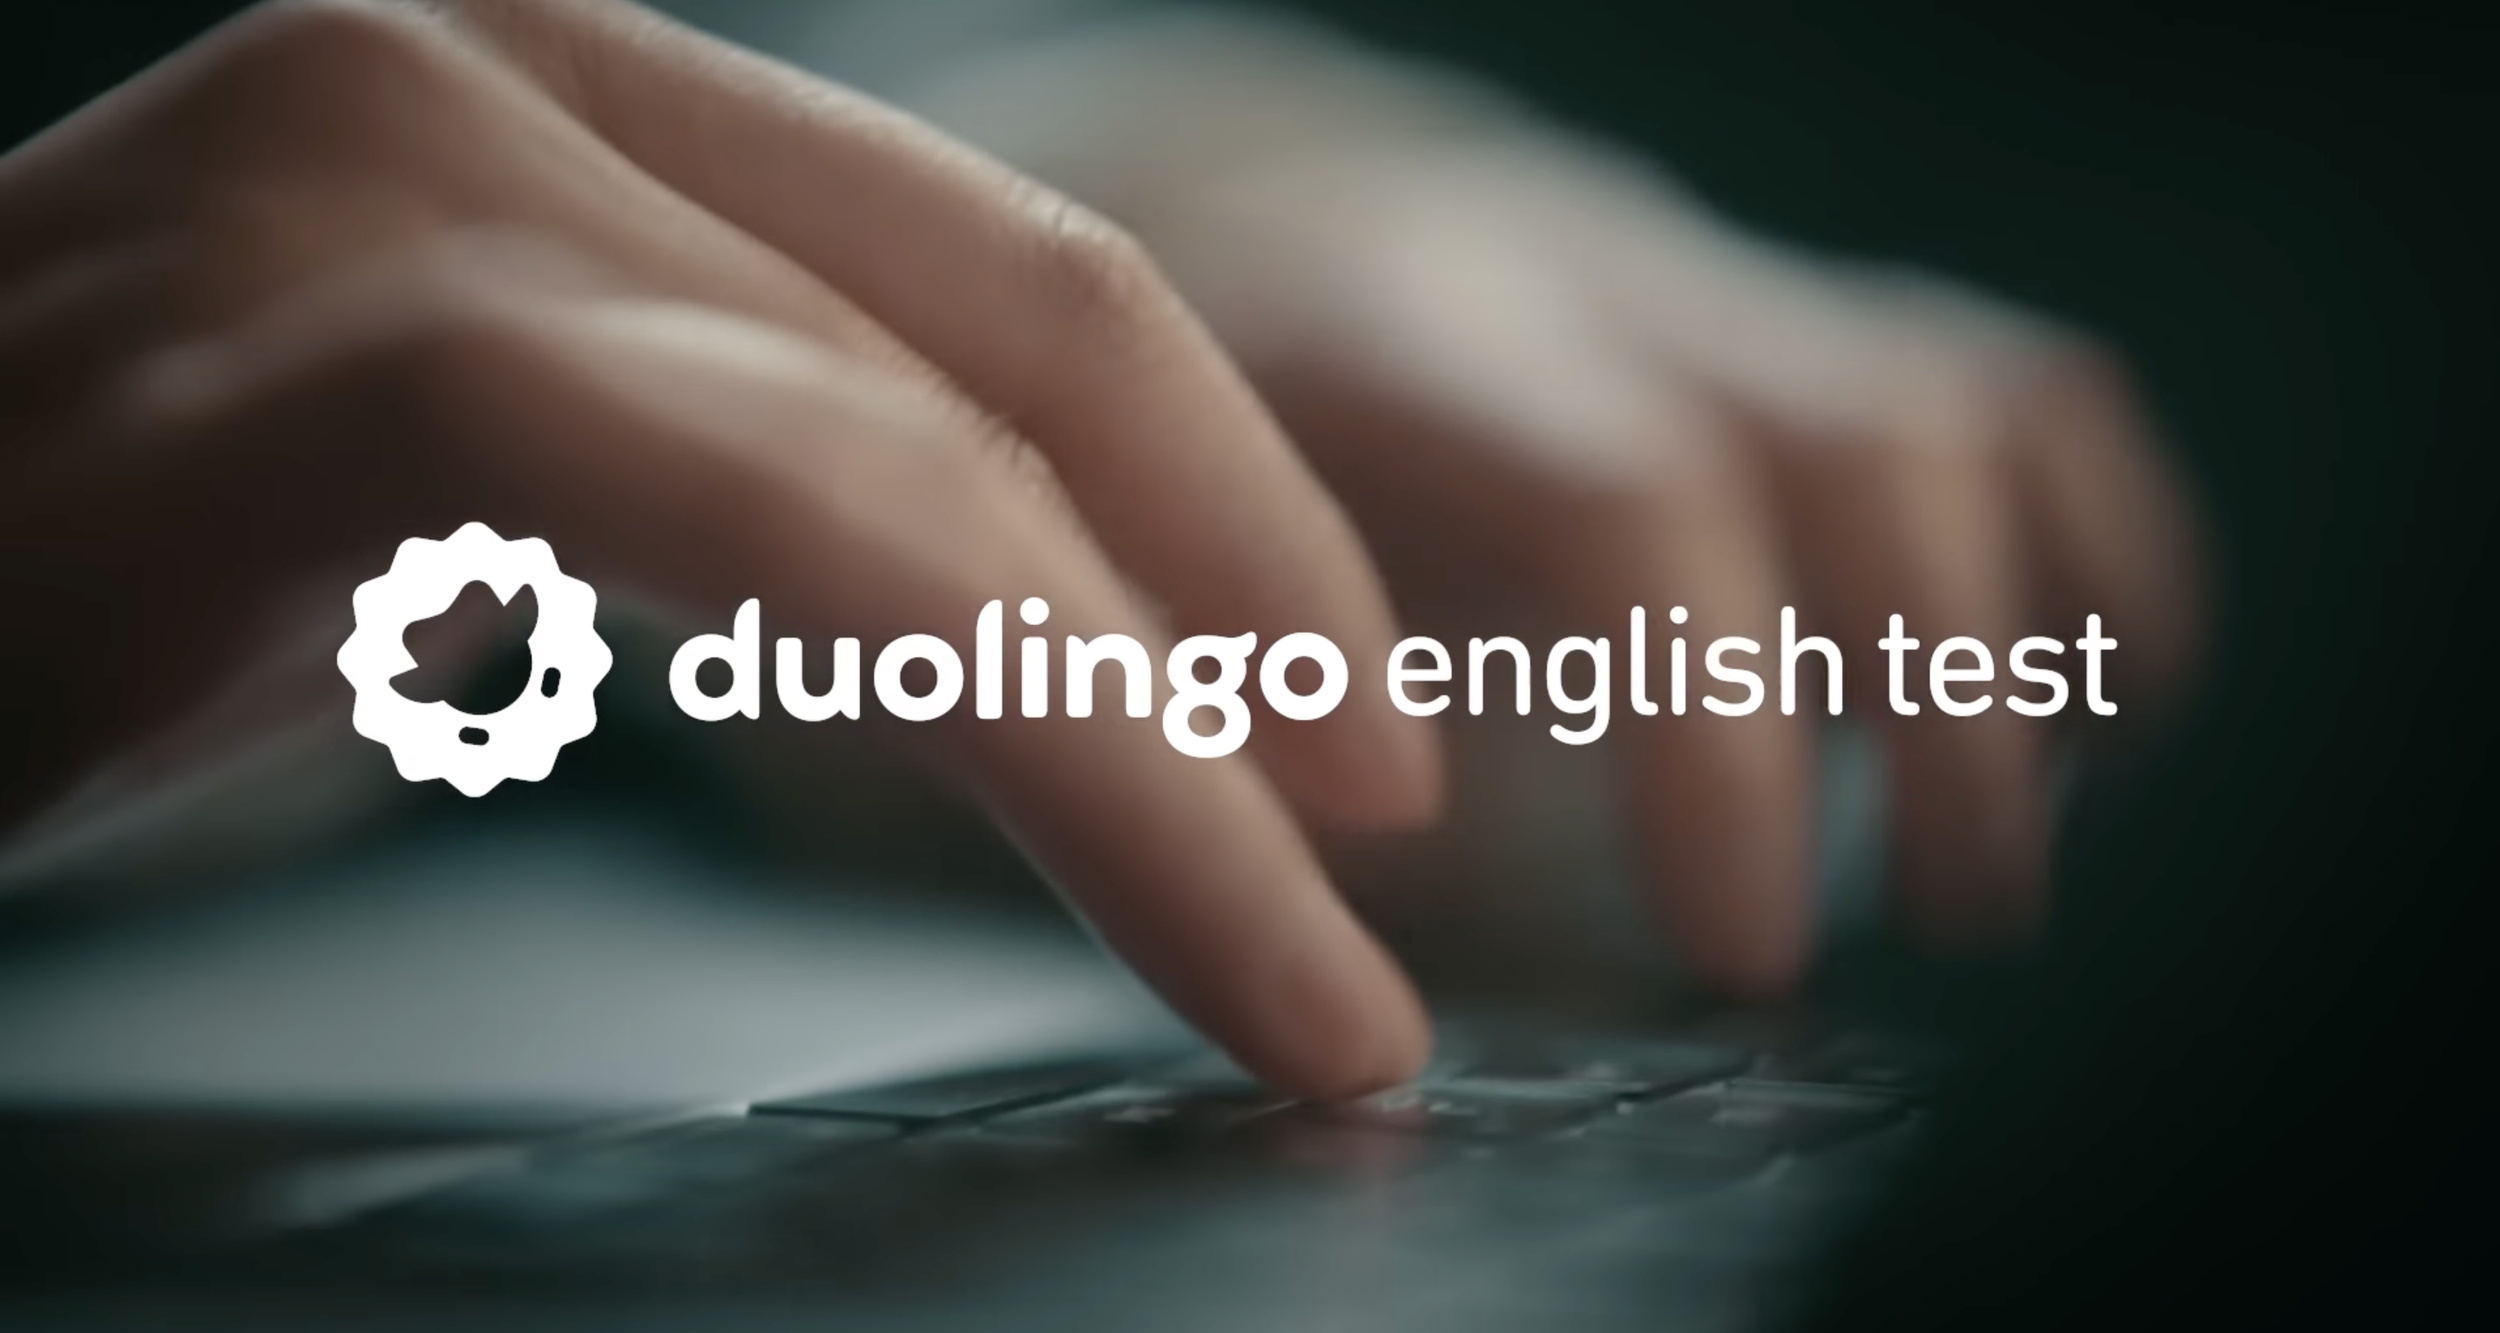 Duolingo English Test: A Bridge to Opportunity